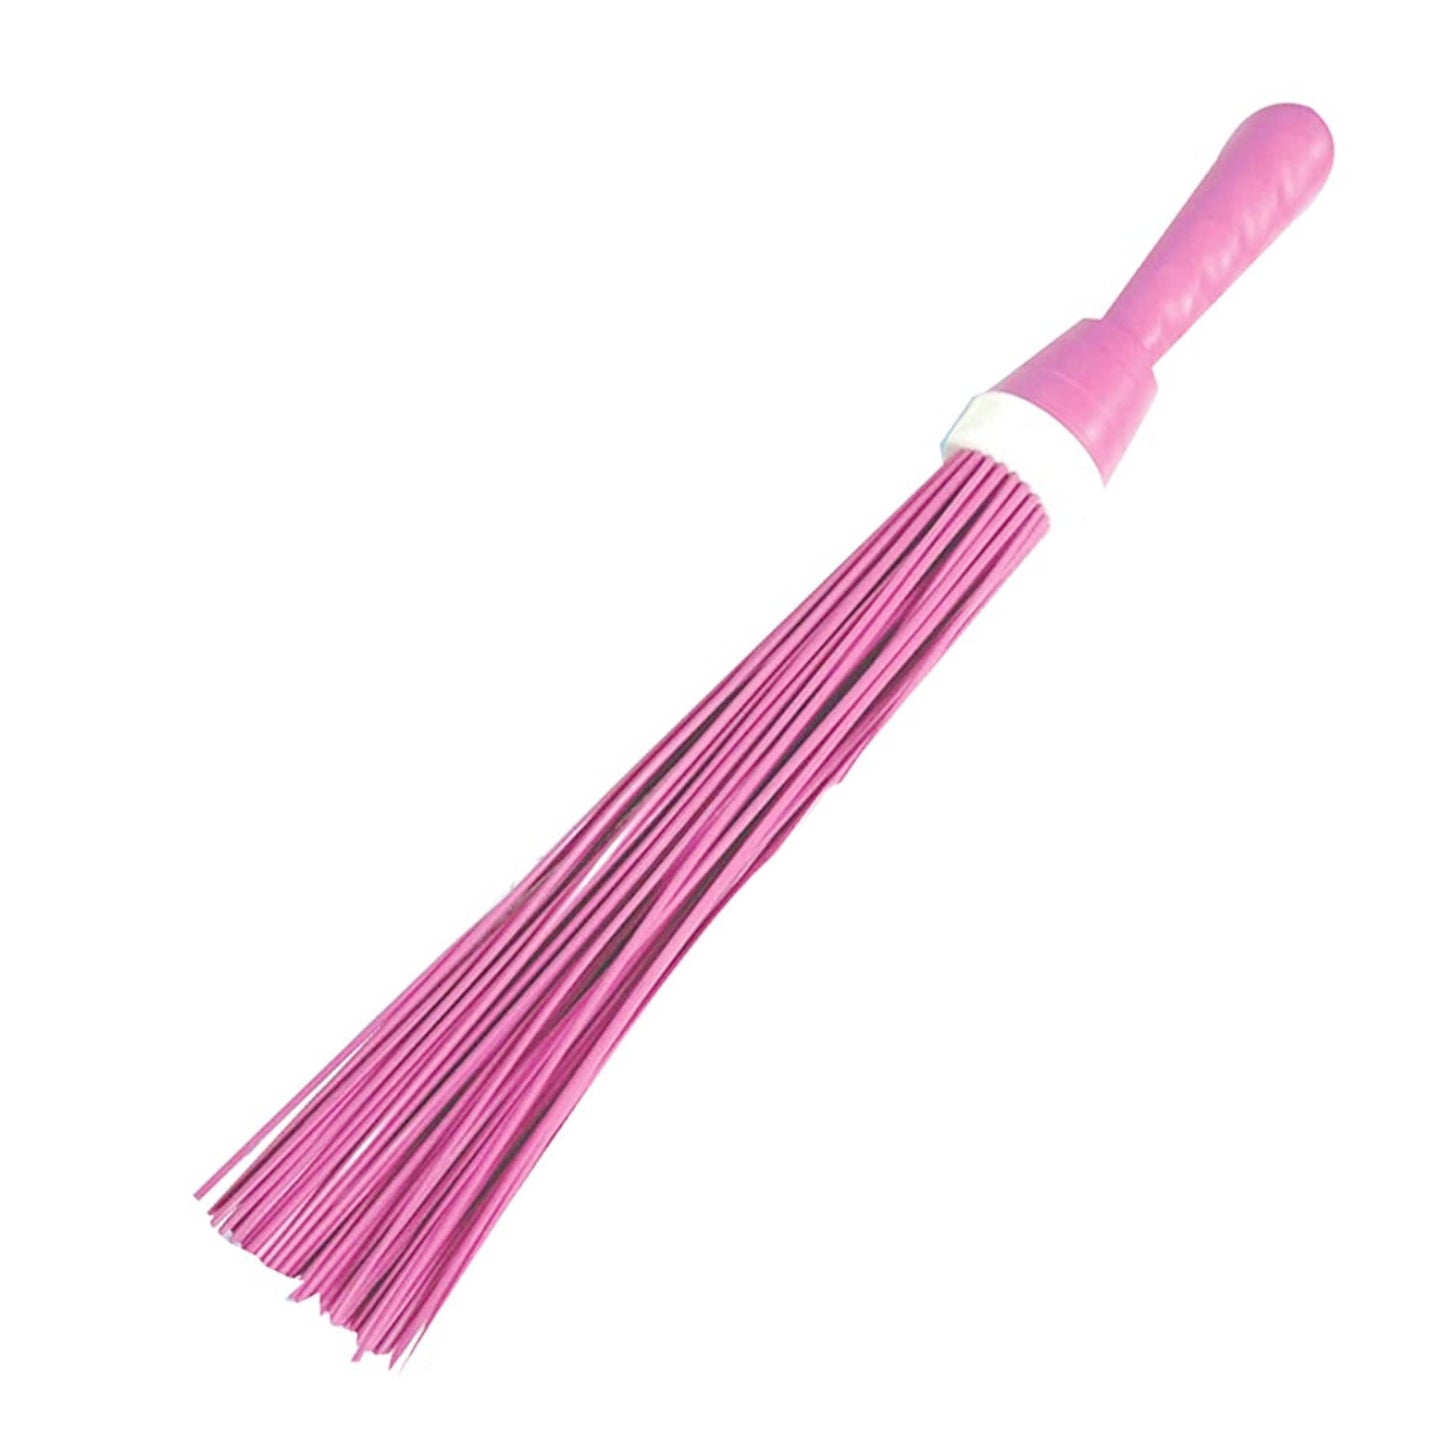 749_Wet & Dry Floor Cleaning Plastic Broom 